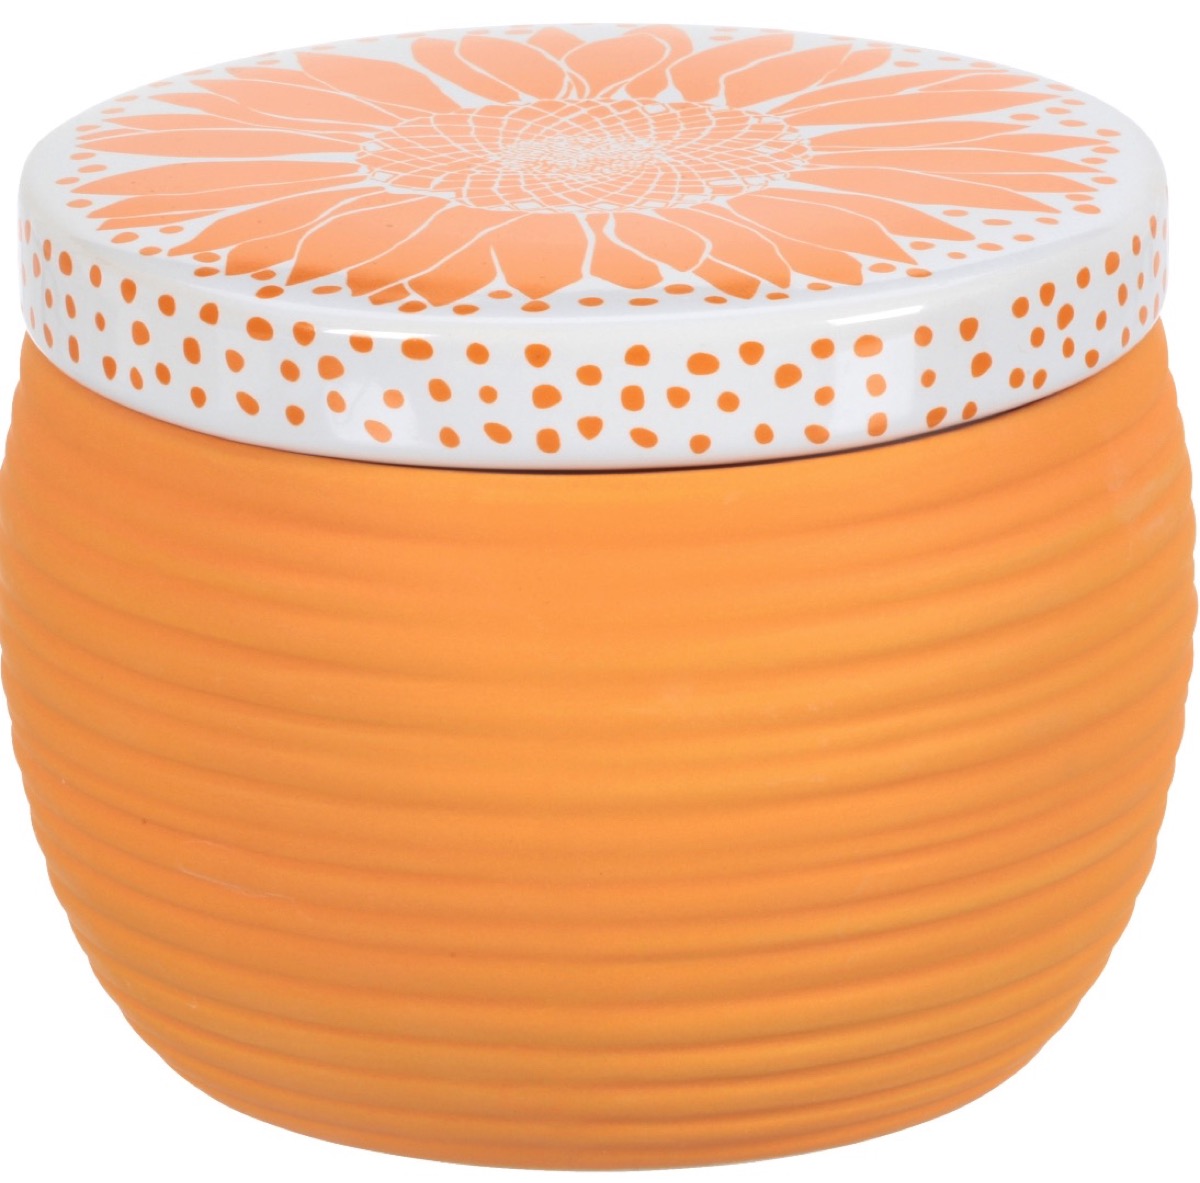 Ceramic Cotton Ball Jar Walmart Shopping